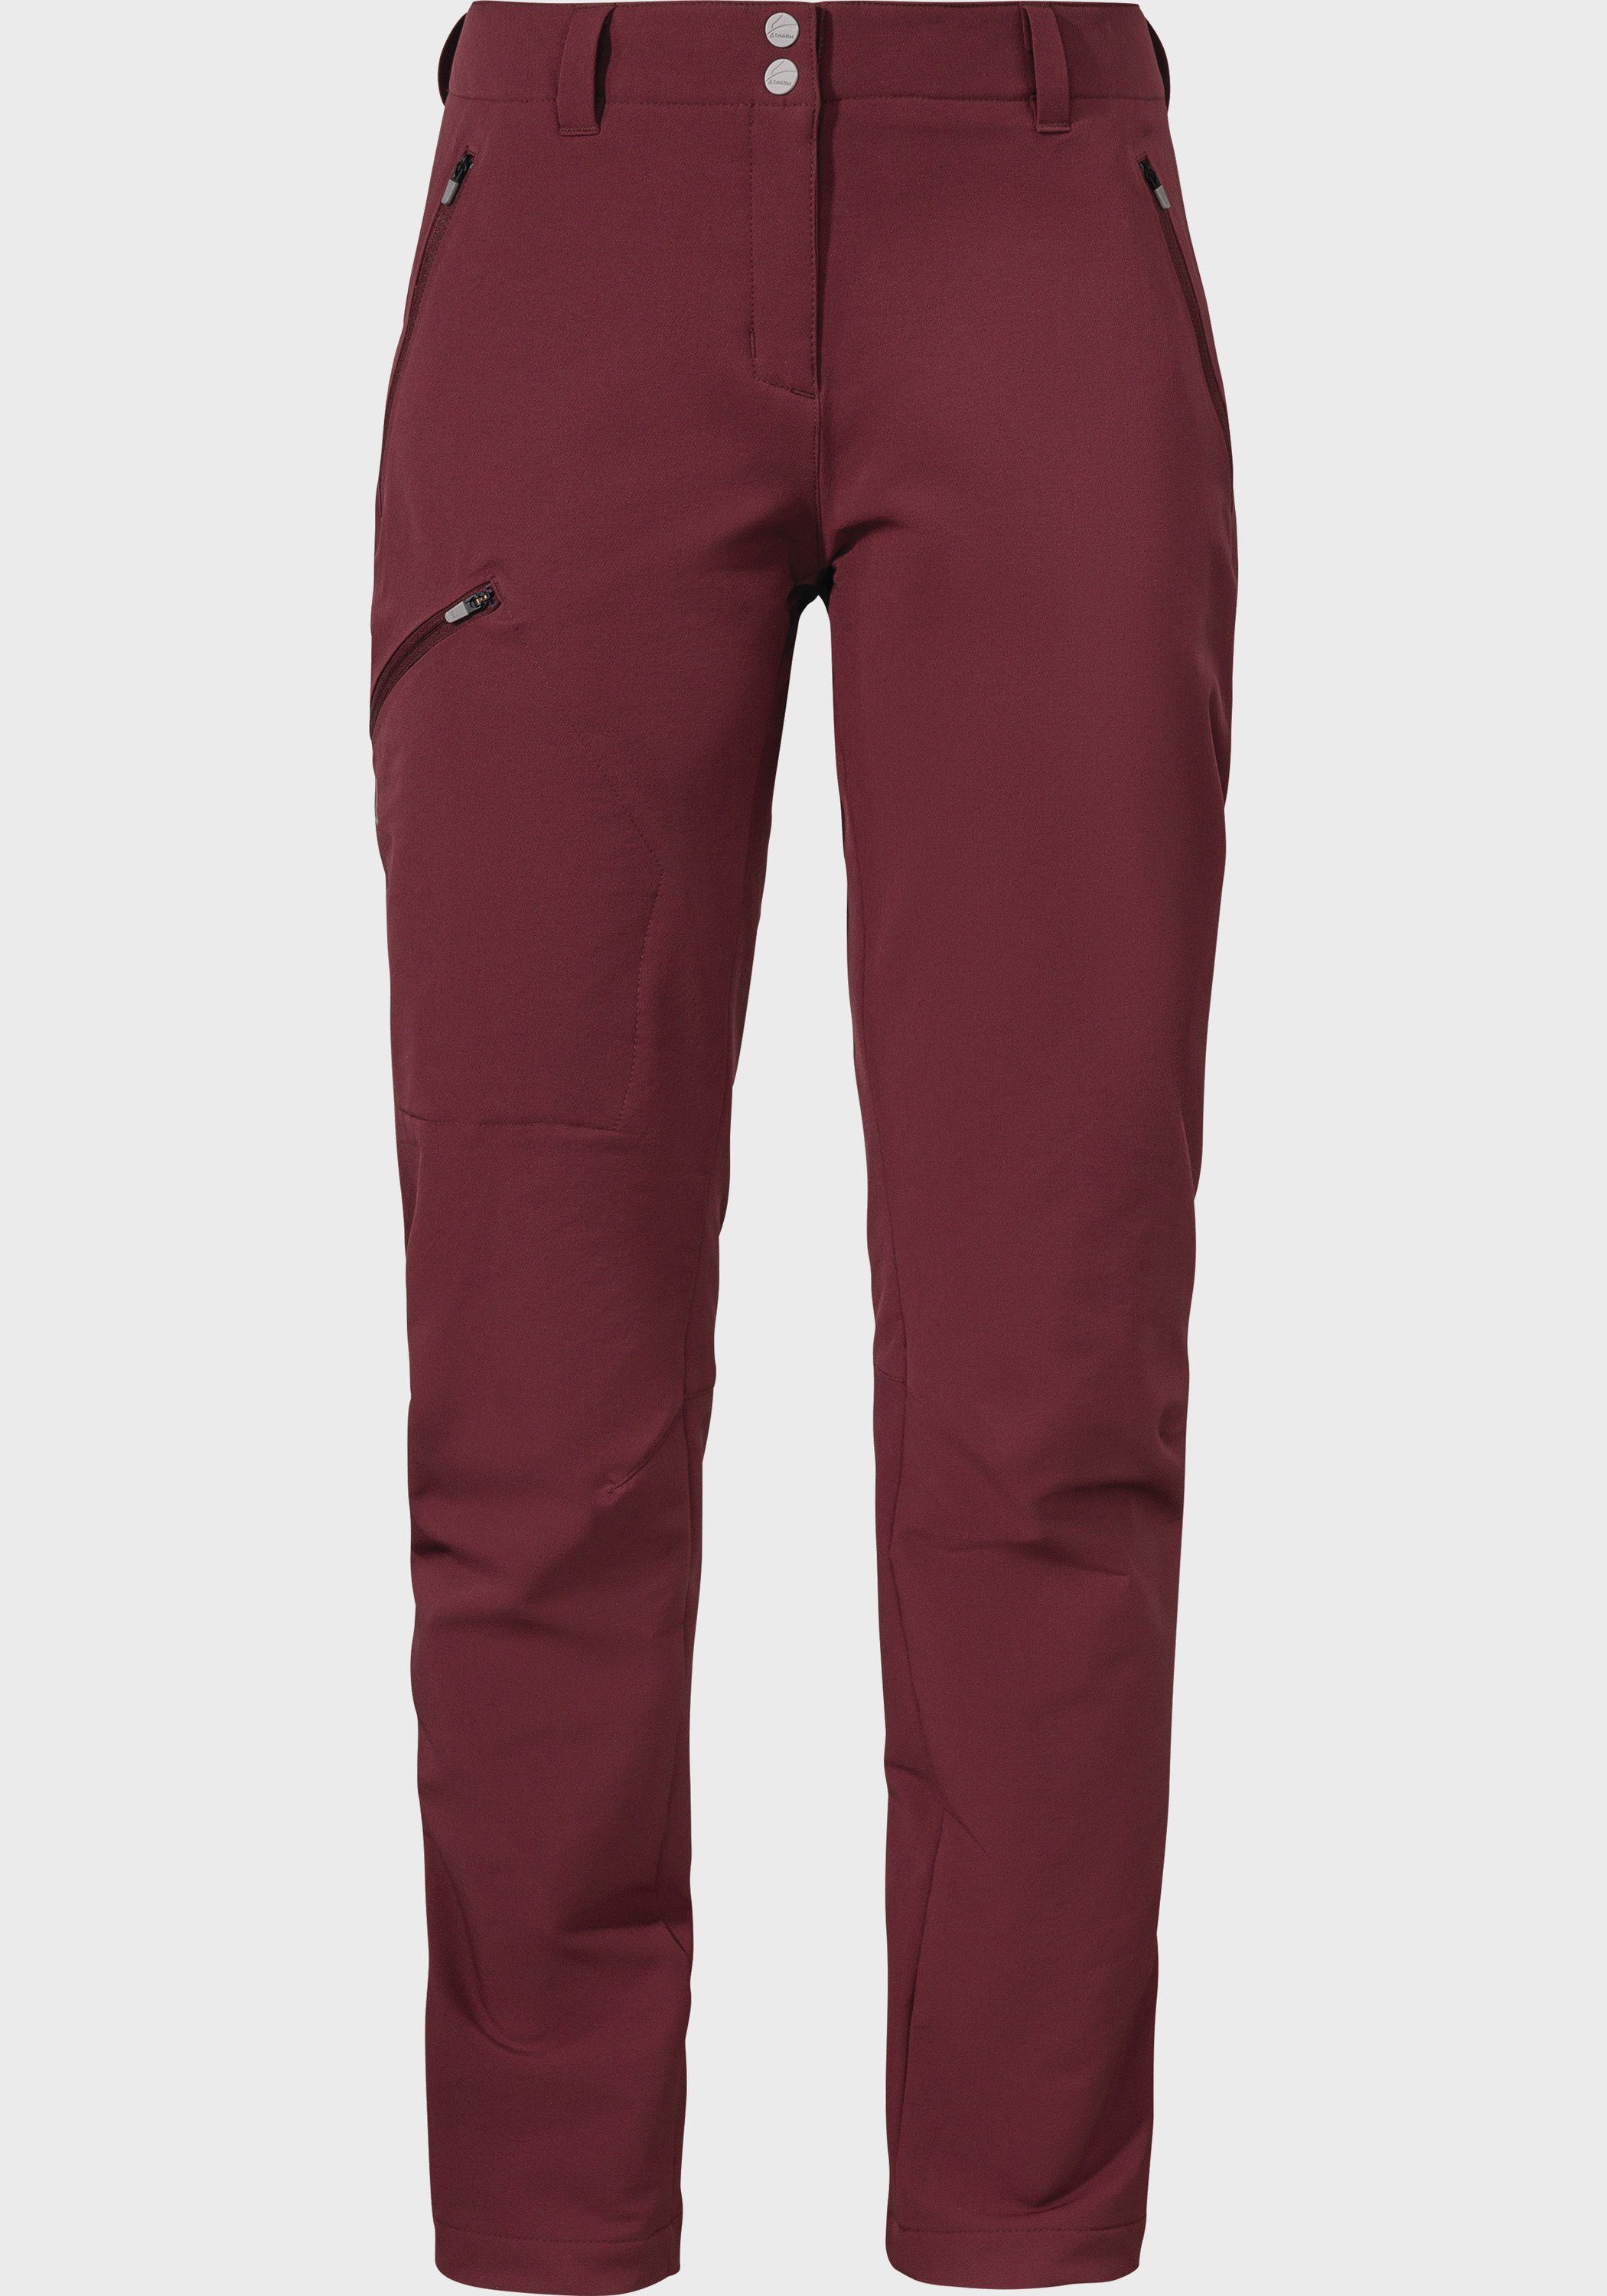 Schöffel Outdoorhose Pants Ascona Warm L rot